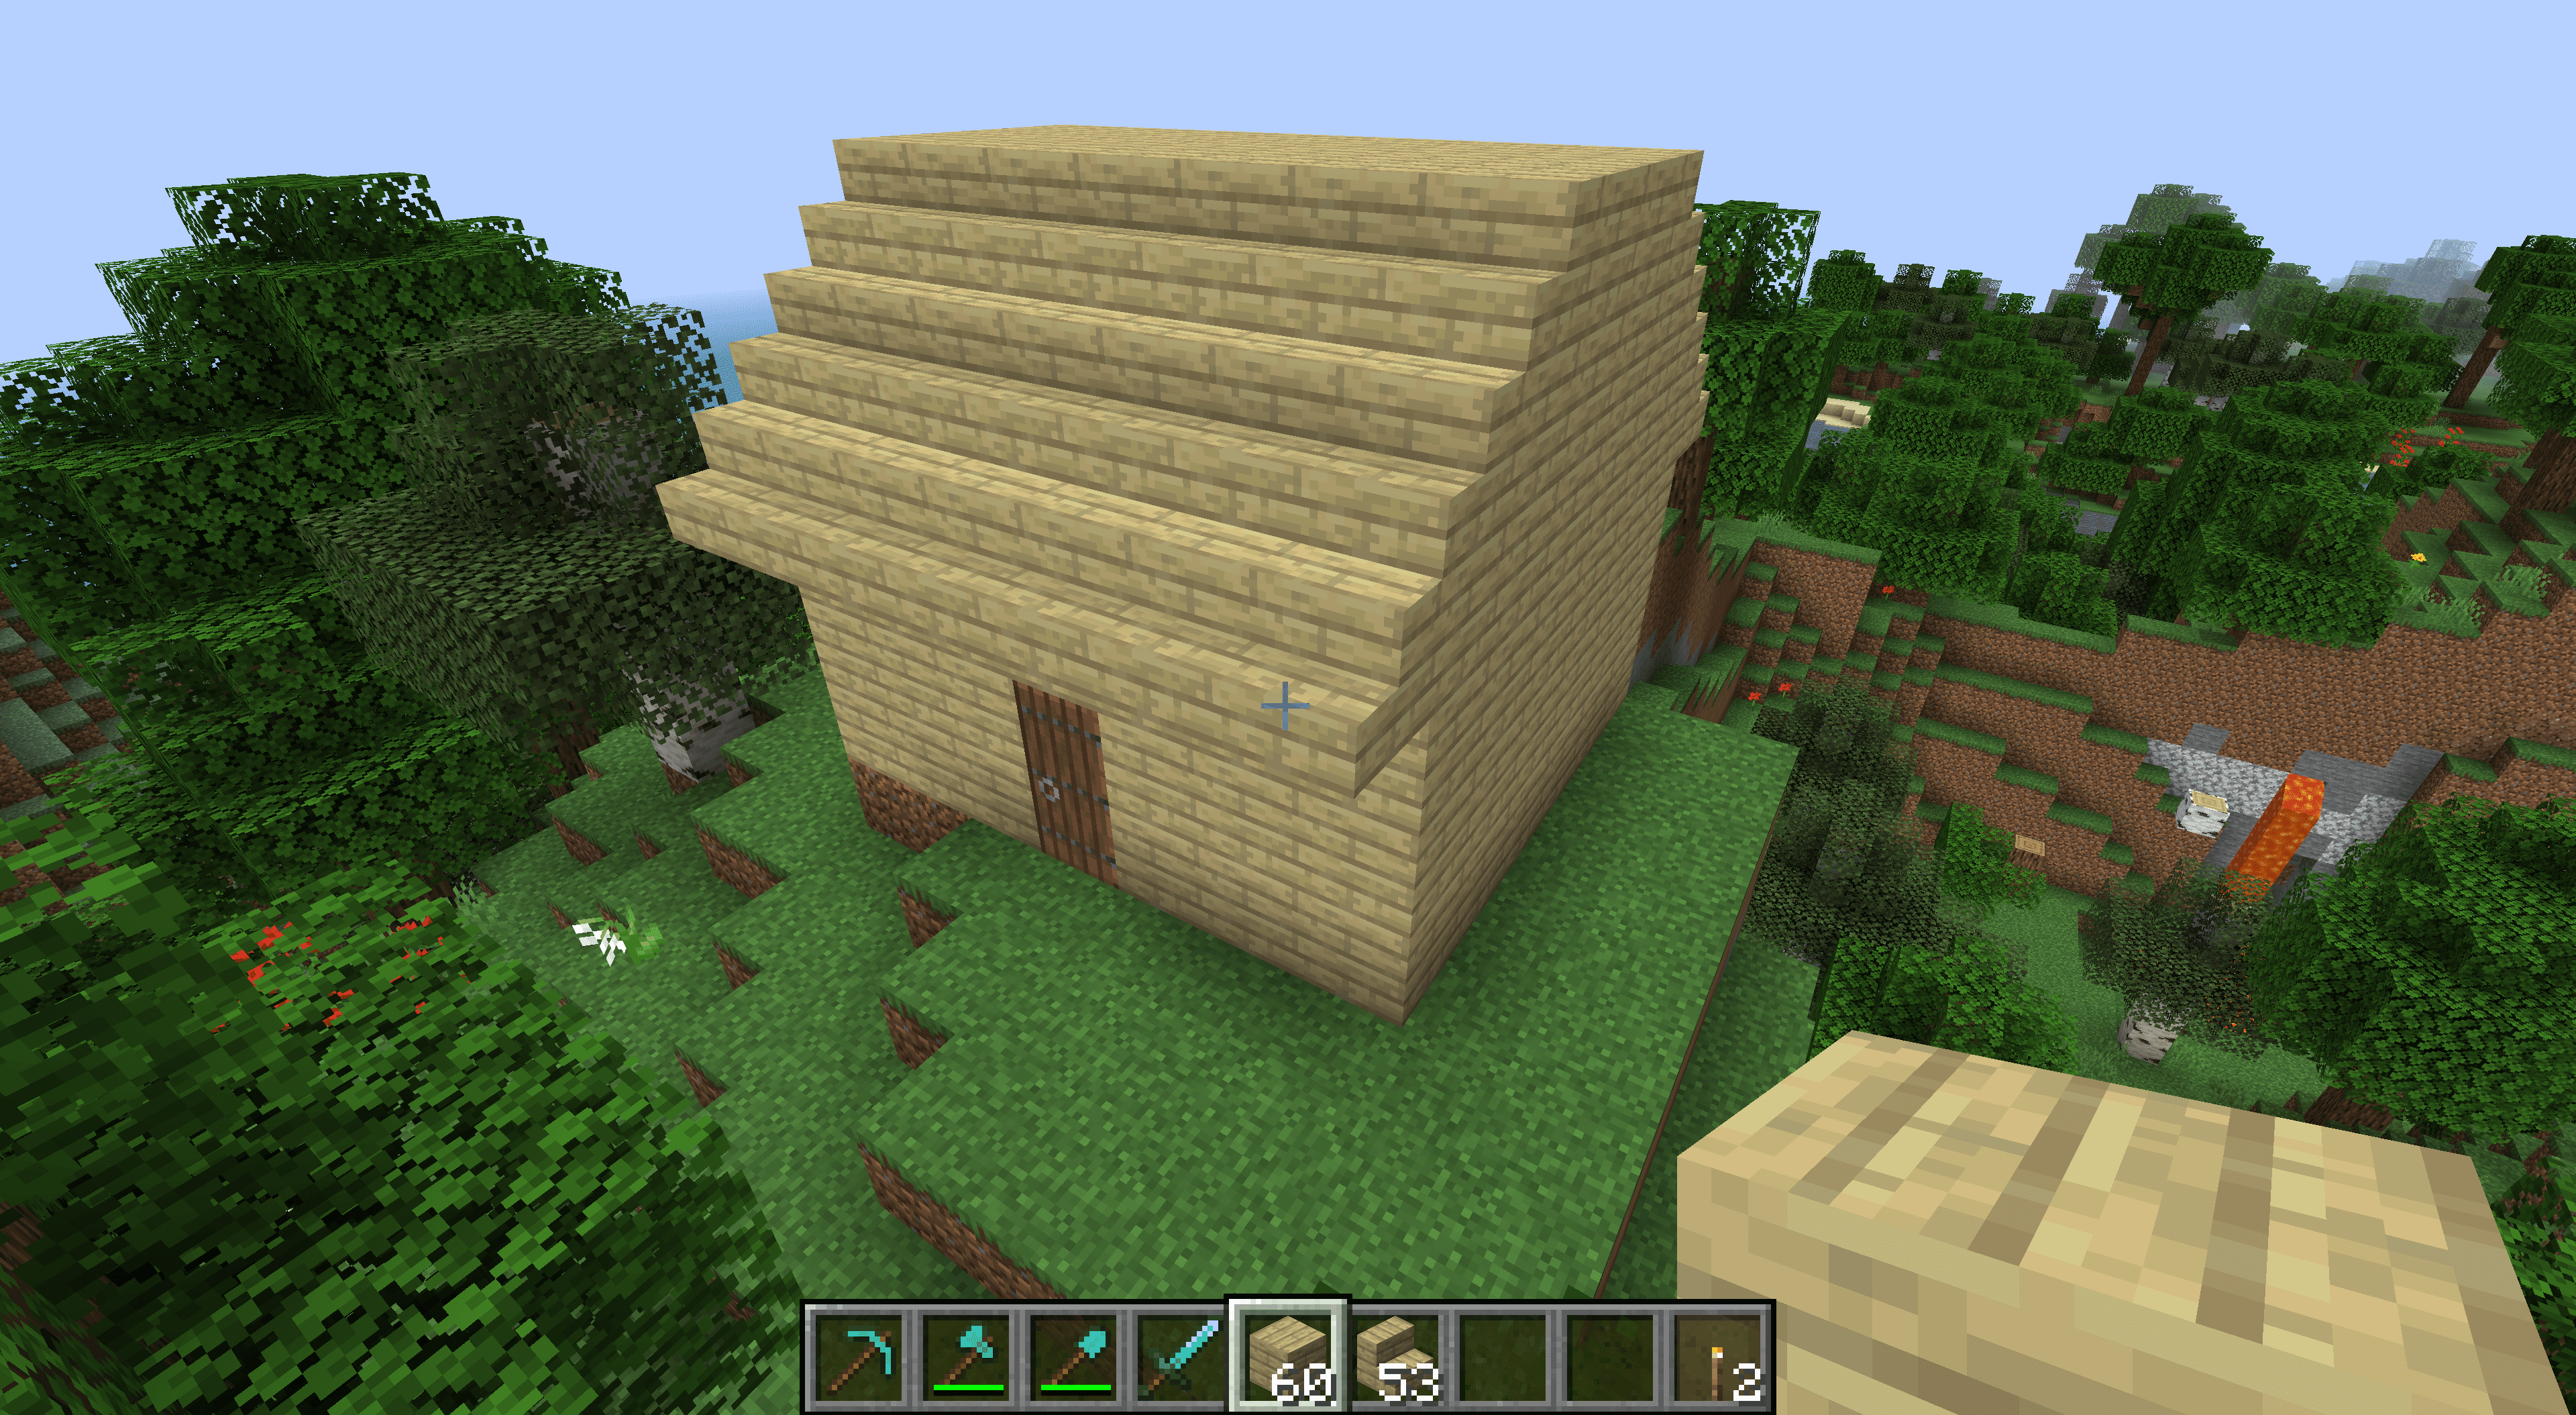 Dům v Minecraftu.